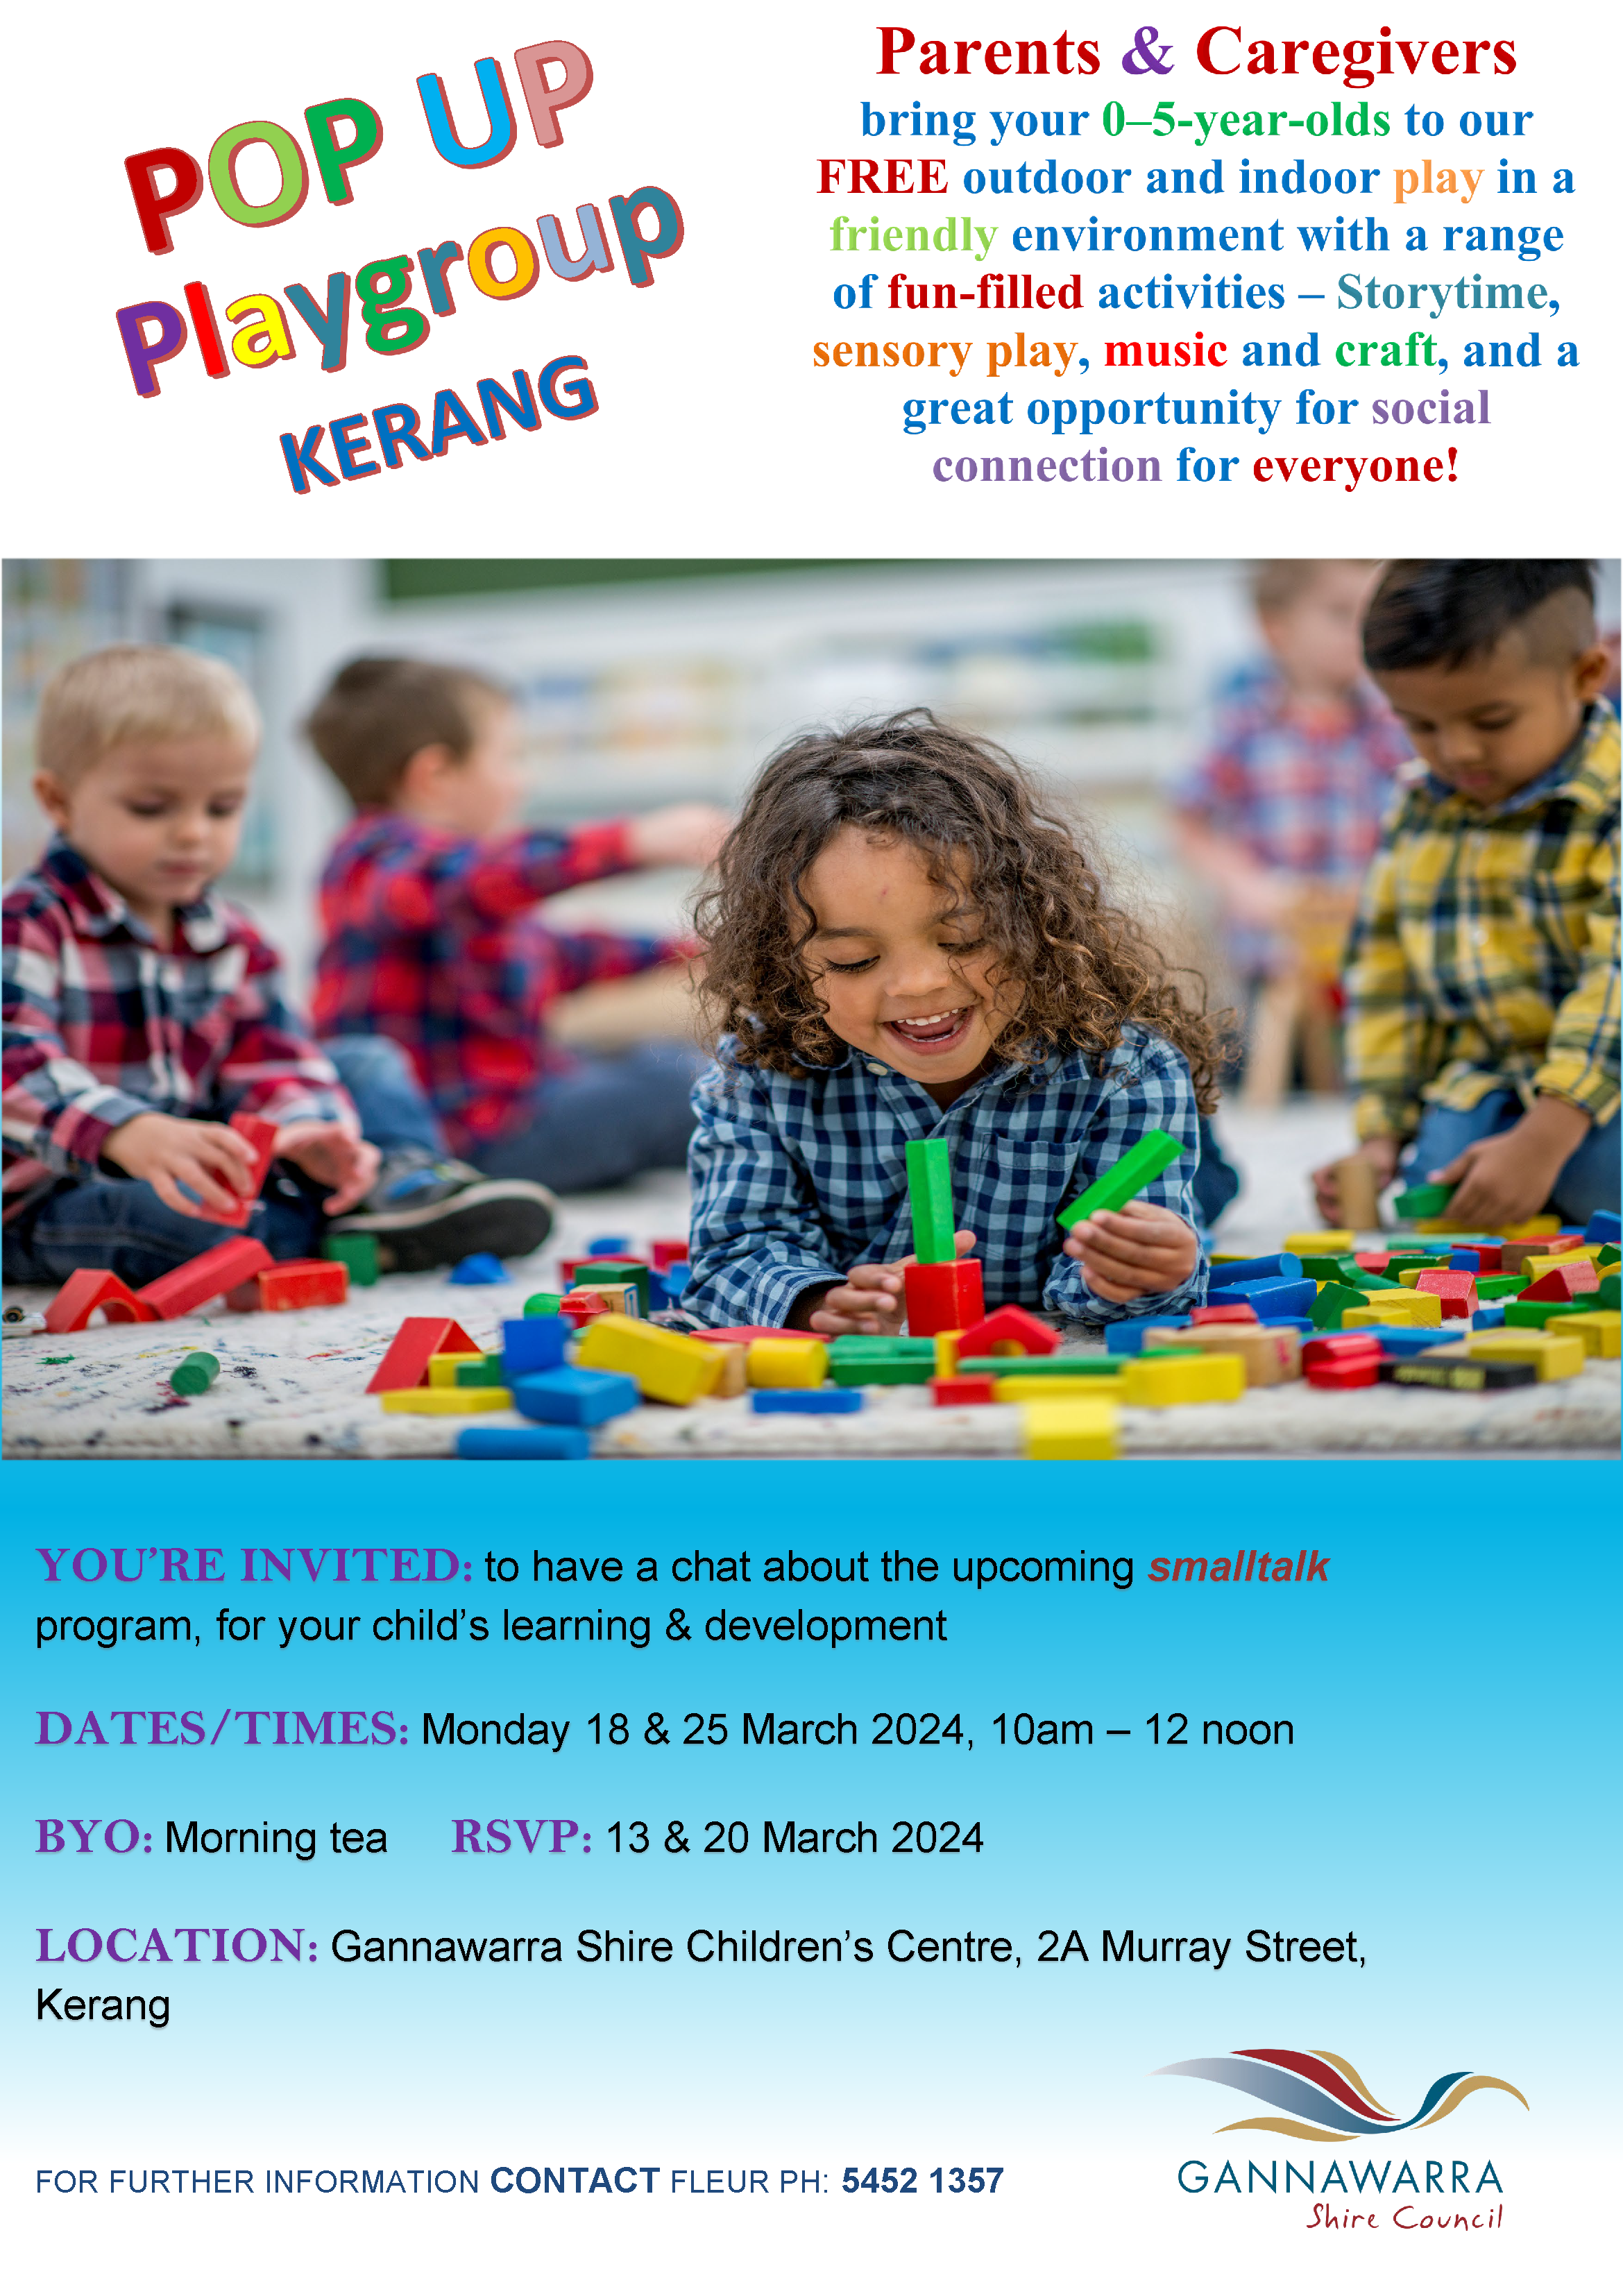 Pop up Playgroup Kerang Event Poster 2024.png